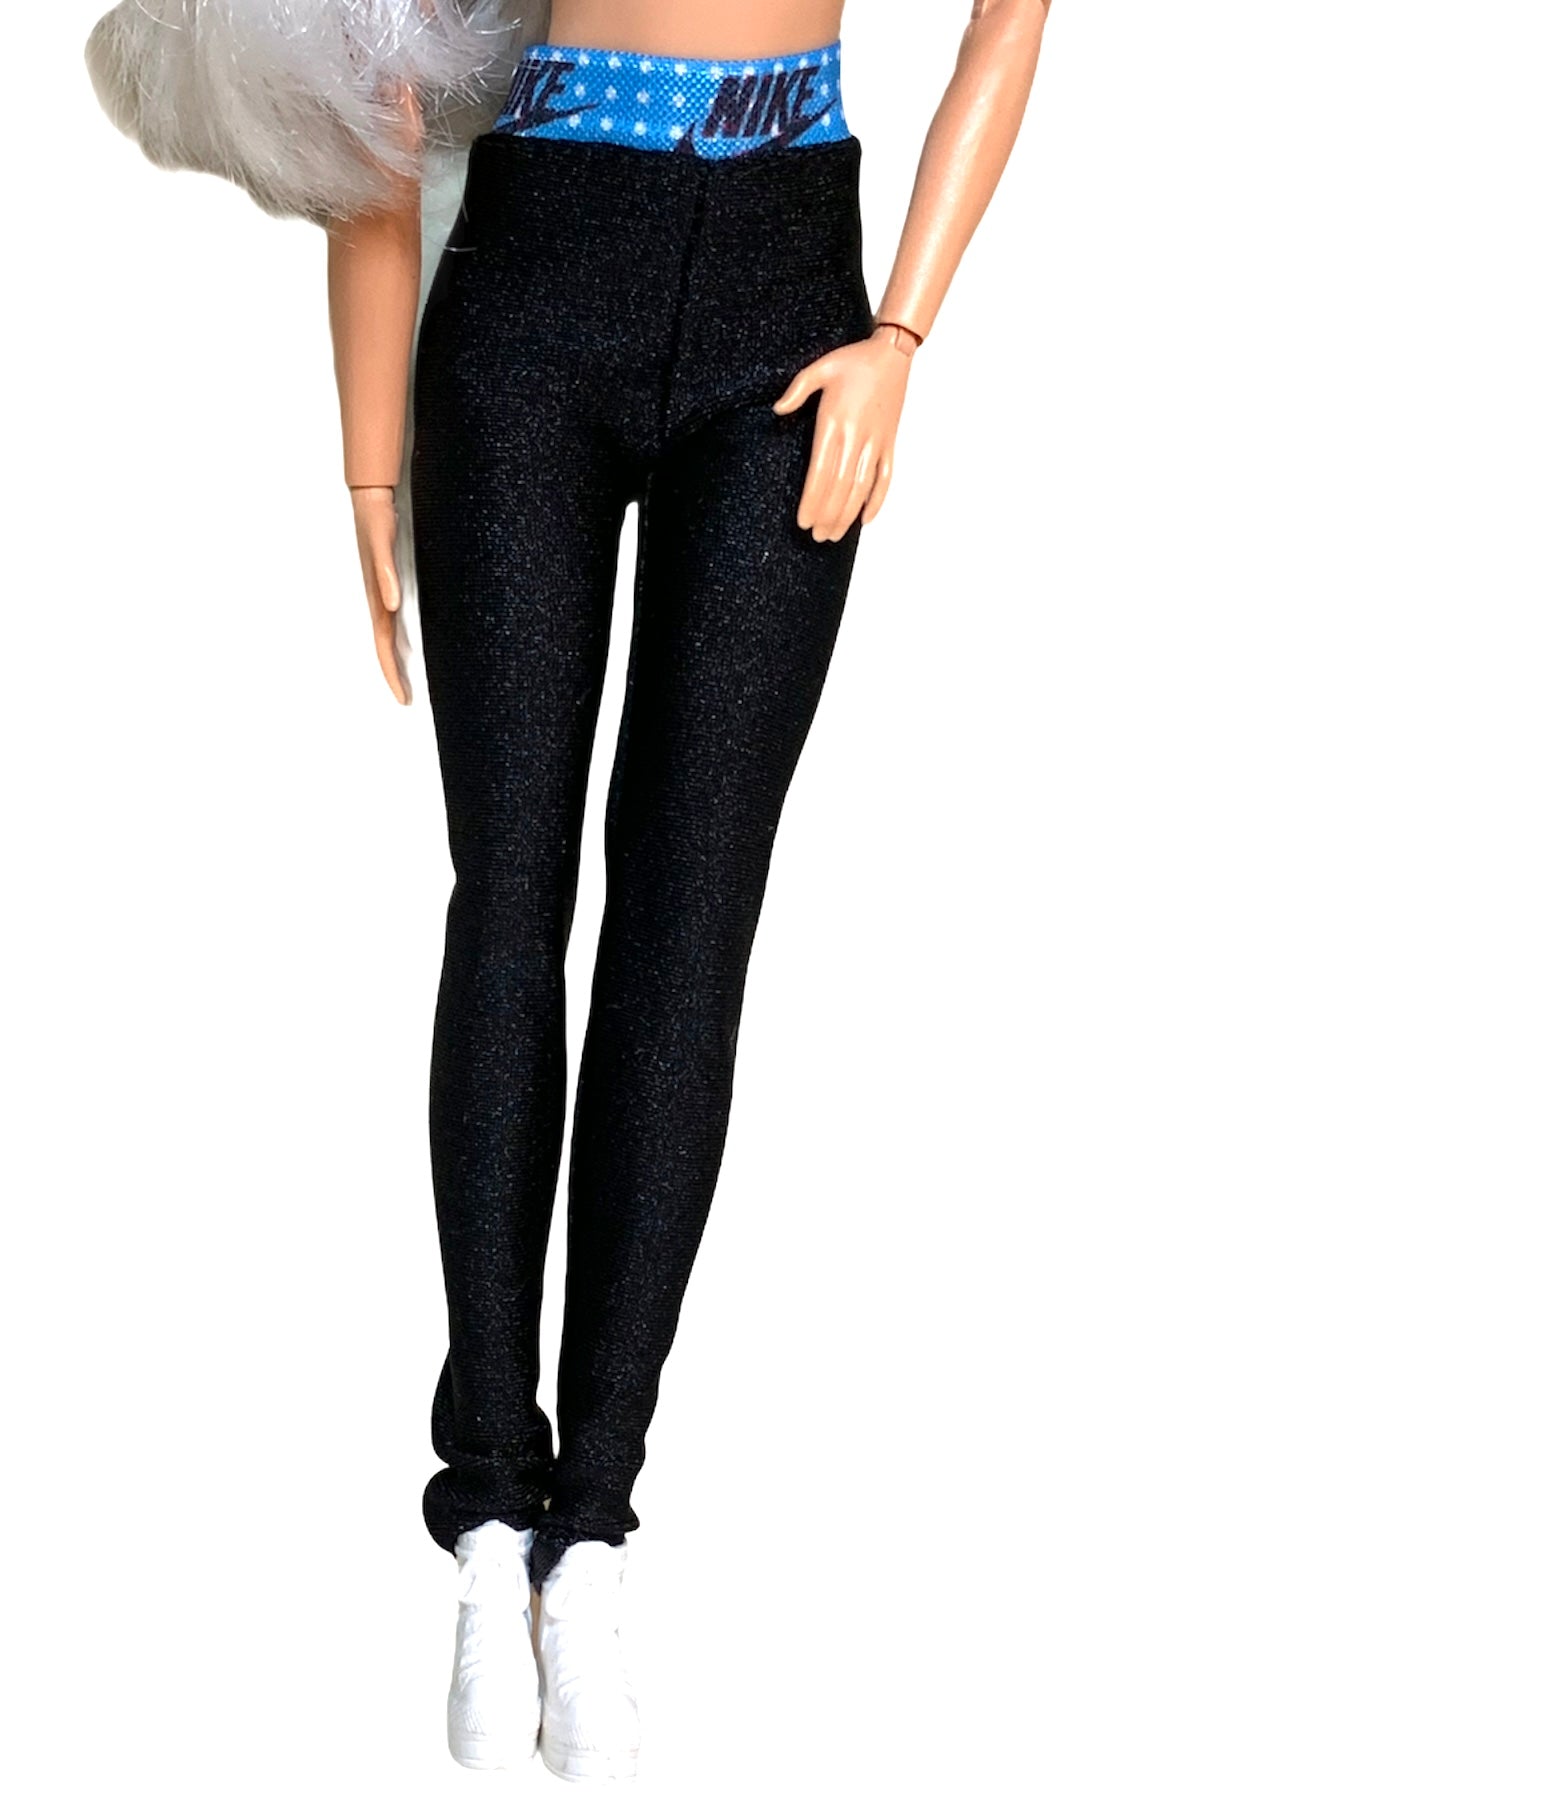 Black pleather leggings for Barbie – The Doll Tailor